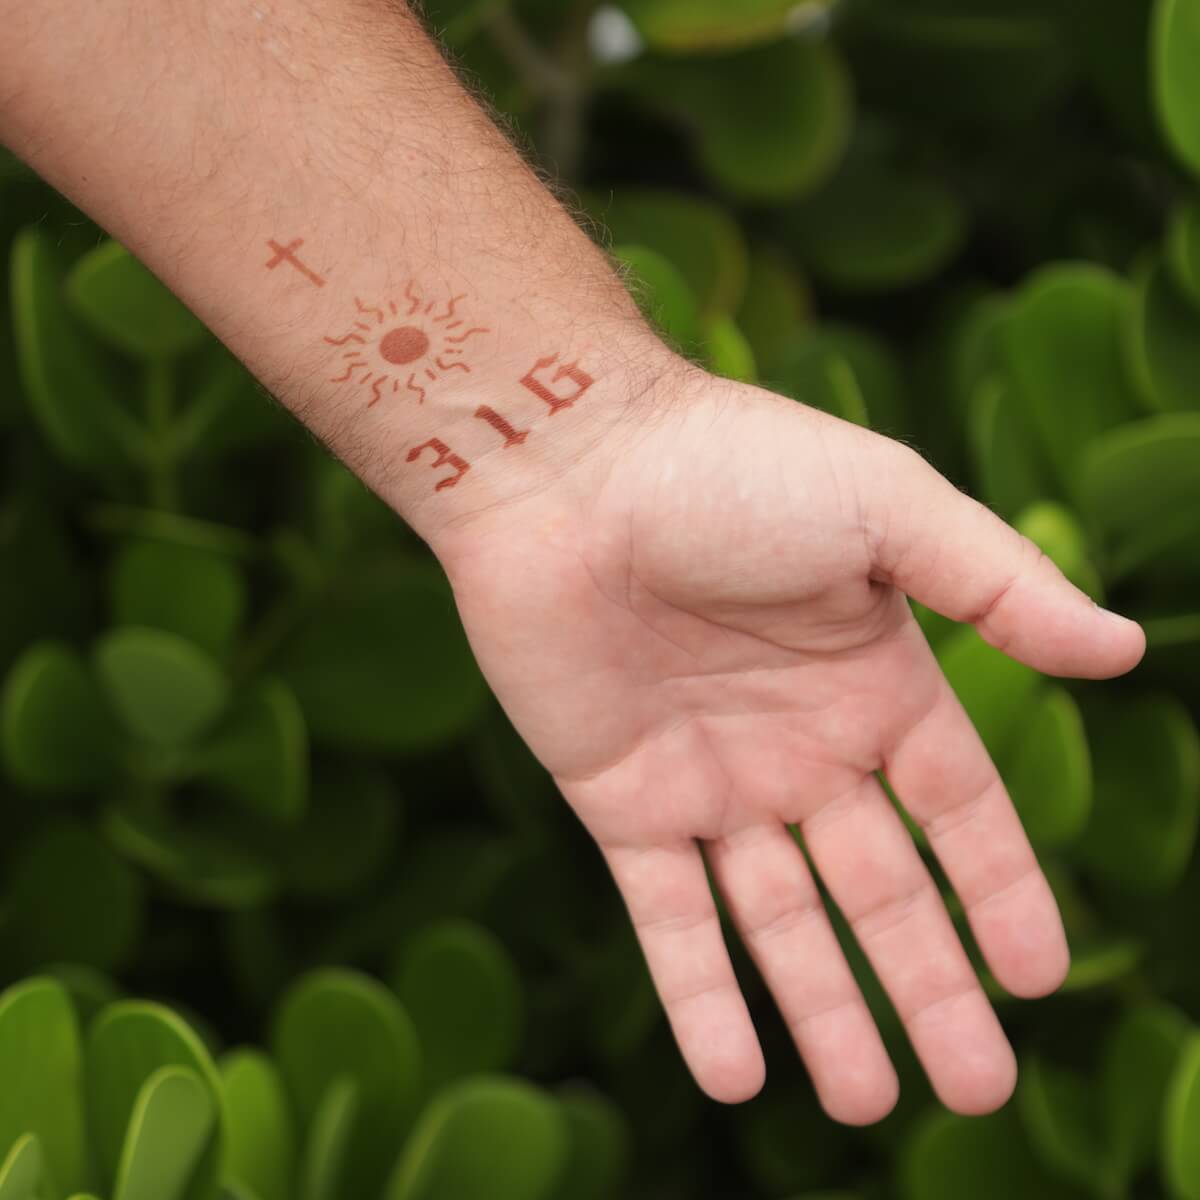 Gothic Numbers - modern henna tattoos on man's wrist